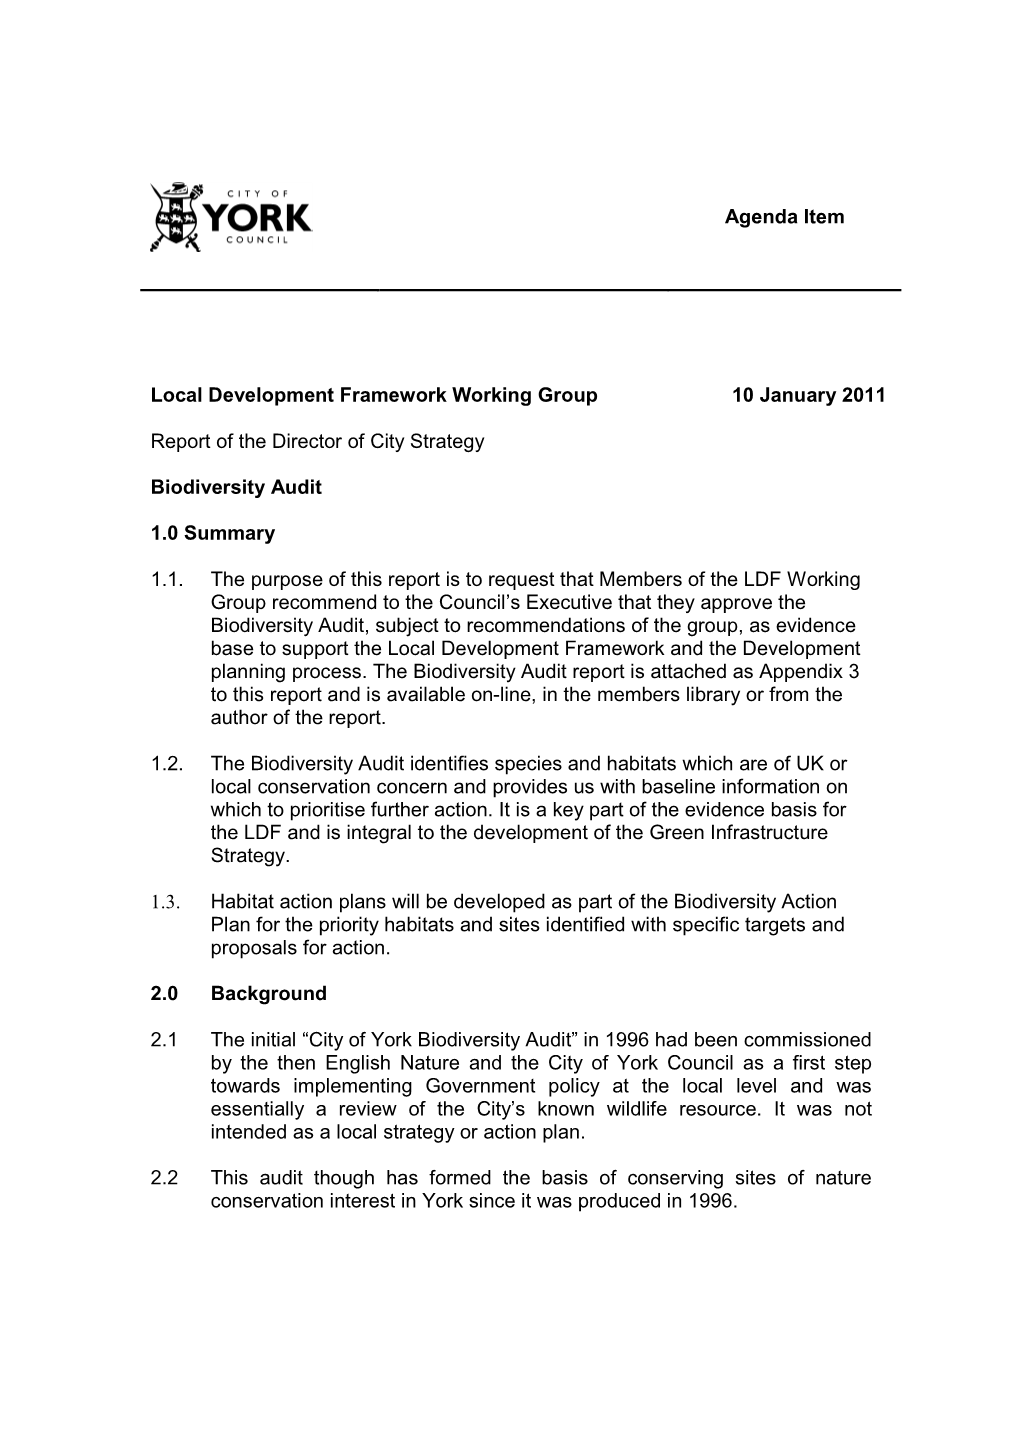 Agenda Item Local Development Framework Working Group 10